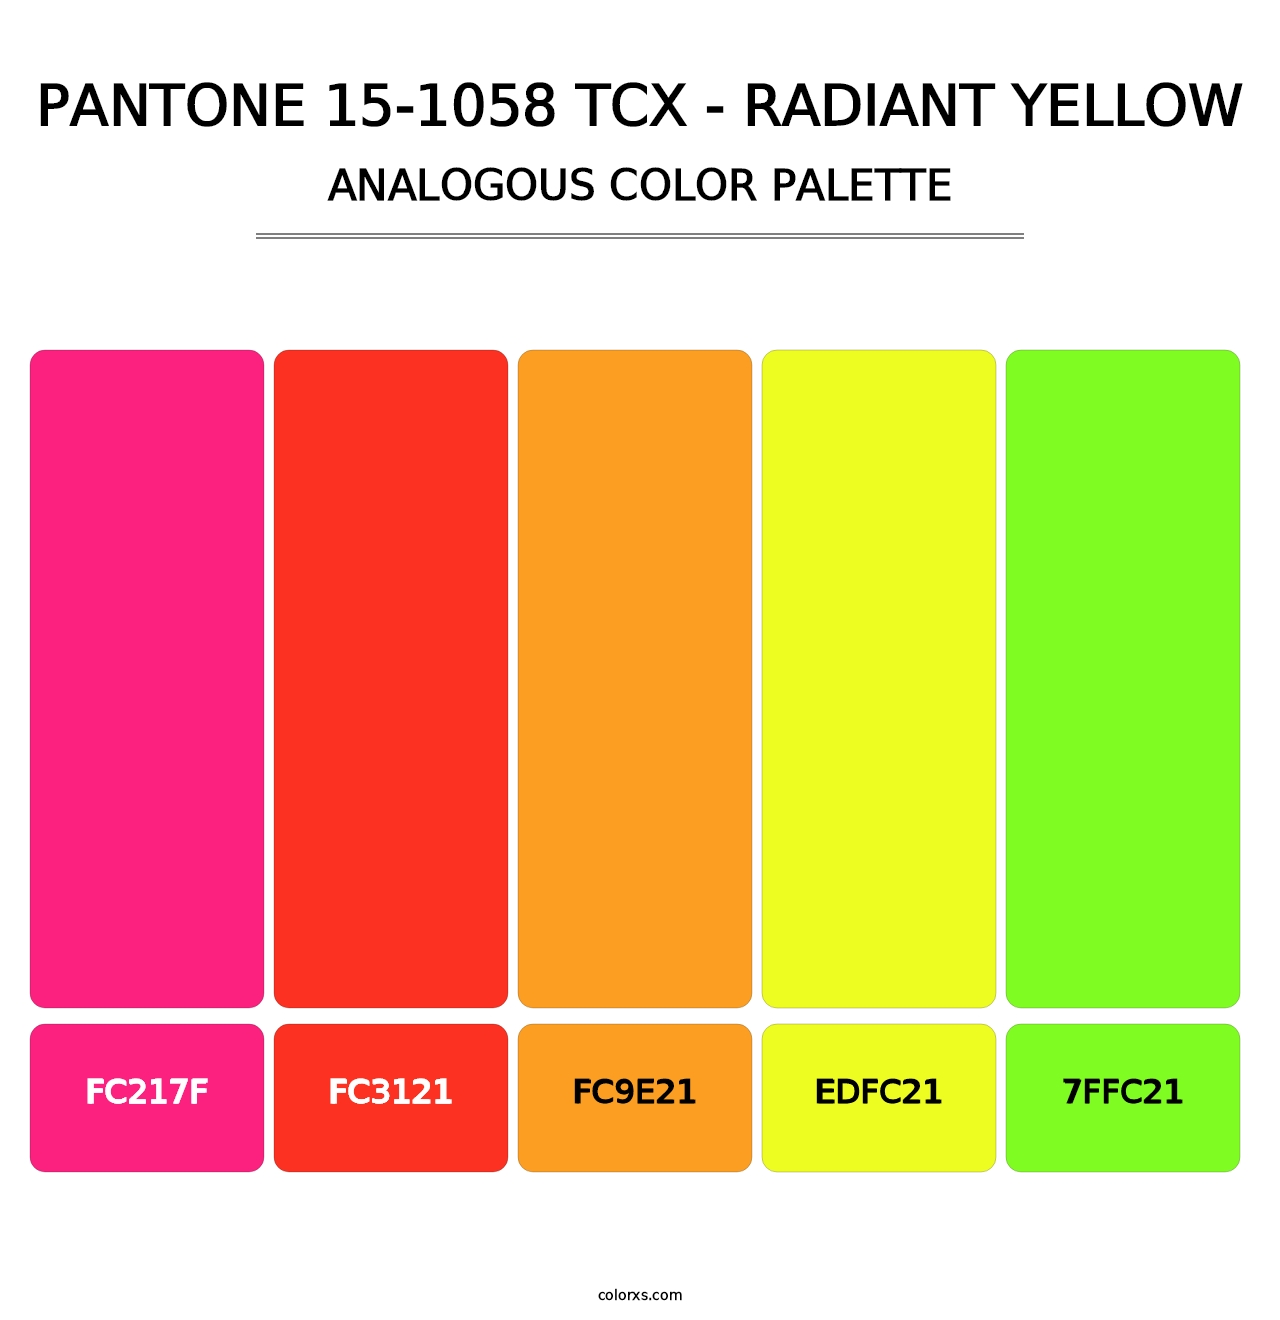 PANTONE 15-1058 TCX - Radiant Yellow - Analogous Color Palette